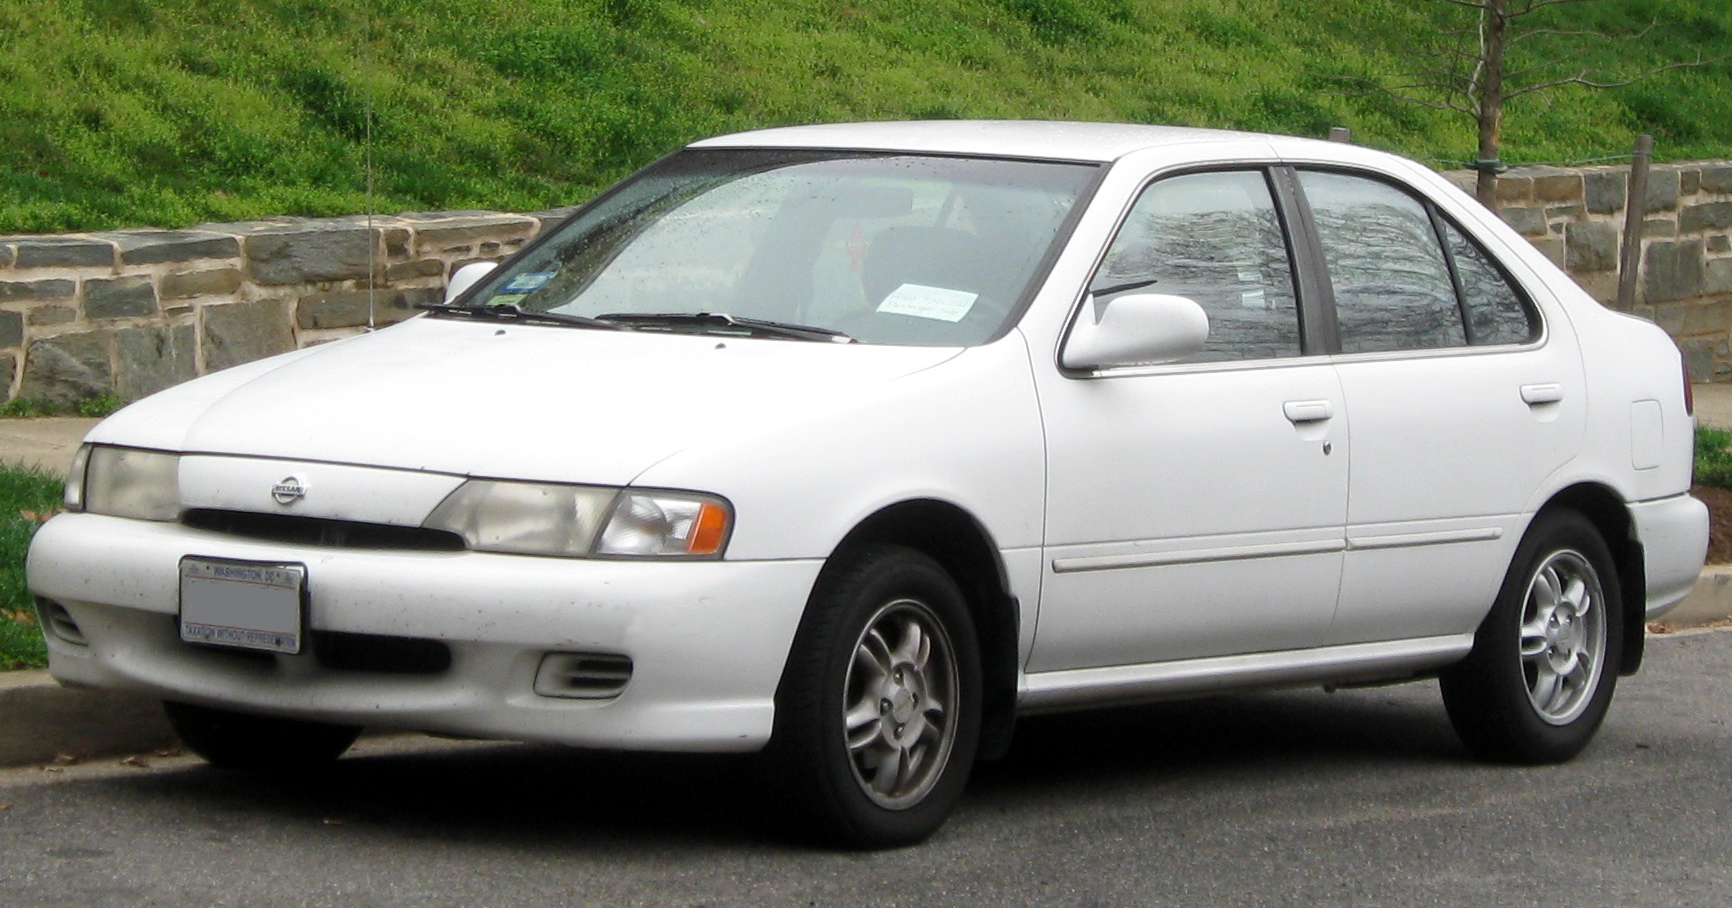 File:1999 Nissan Sentra GXE -- 03-21-2012.JPG - Wikimedia Commons